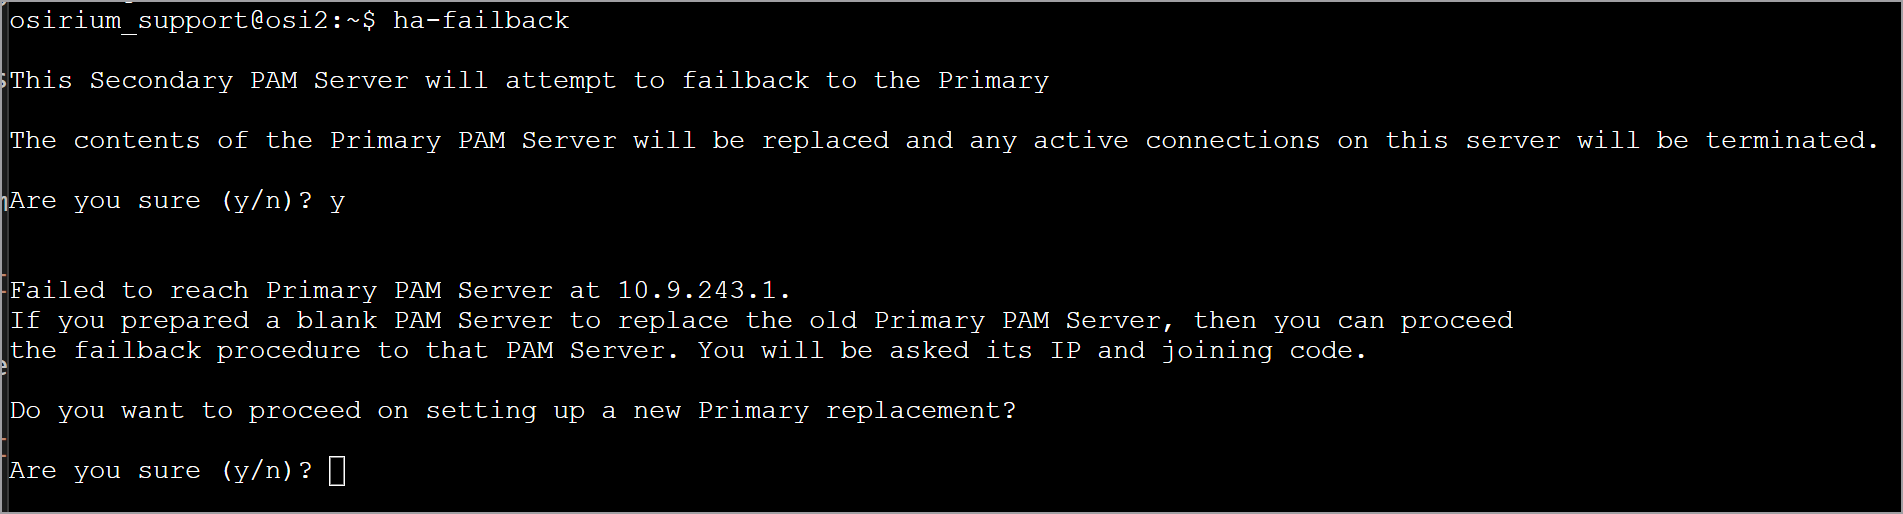 Setup new Primary PAM Server